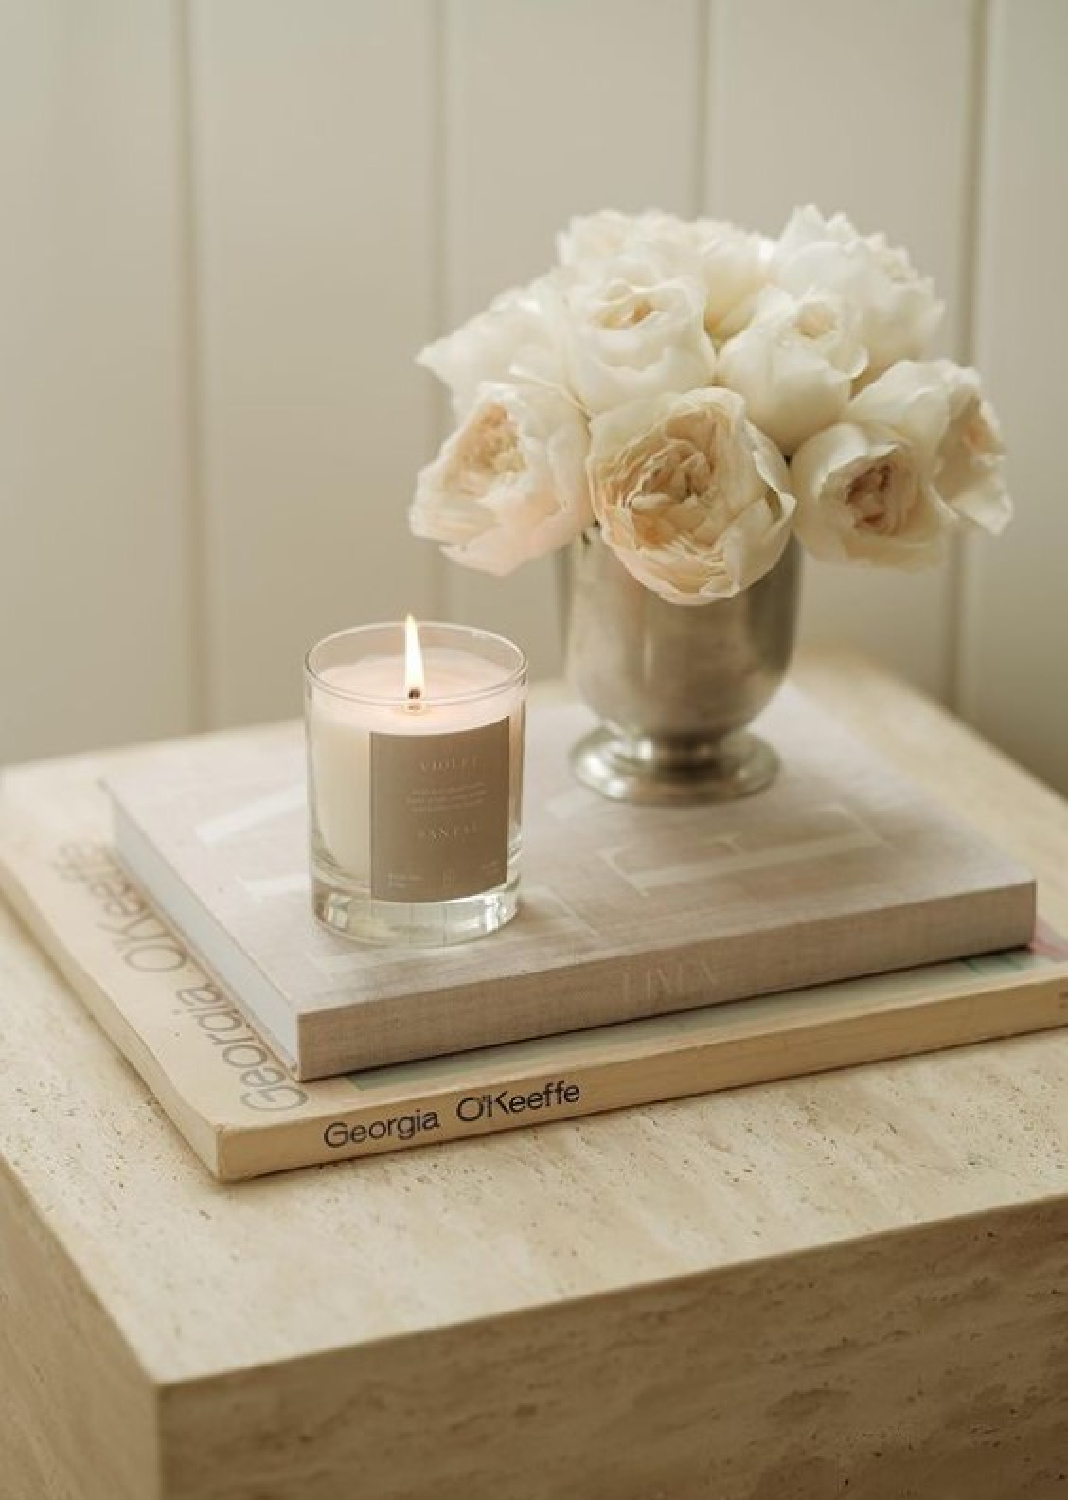 Pale blush roses and canlde - Jenni Kayne Oak Essentials.